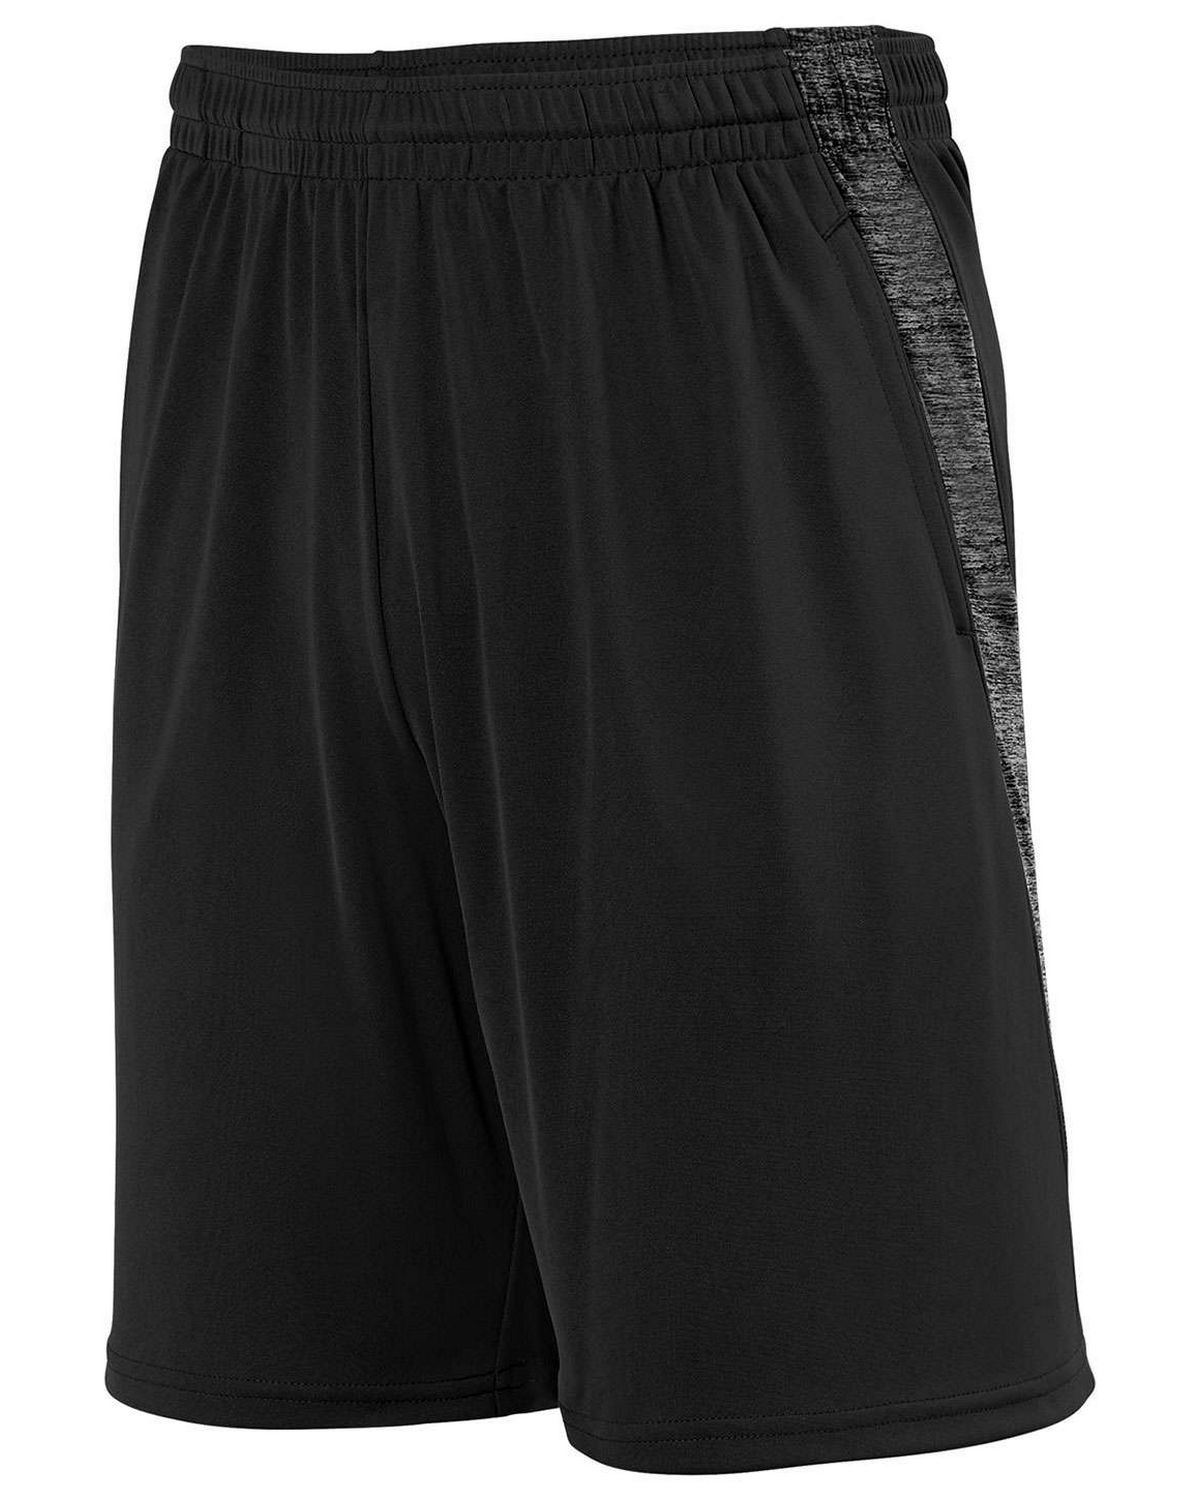 Augusta Sportswear 2960 Unisex Intensify Black Heather Training Short